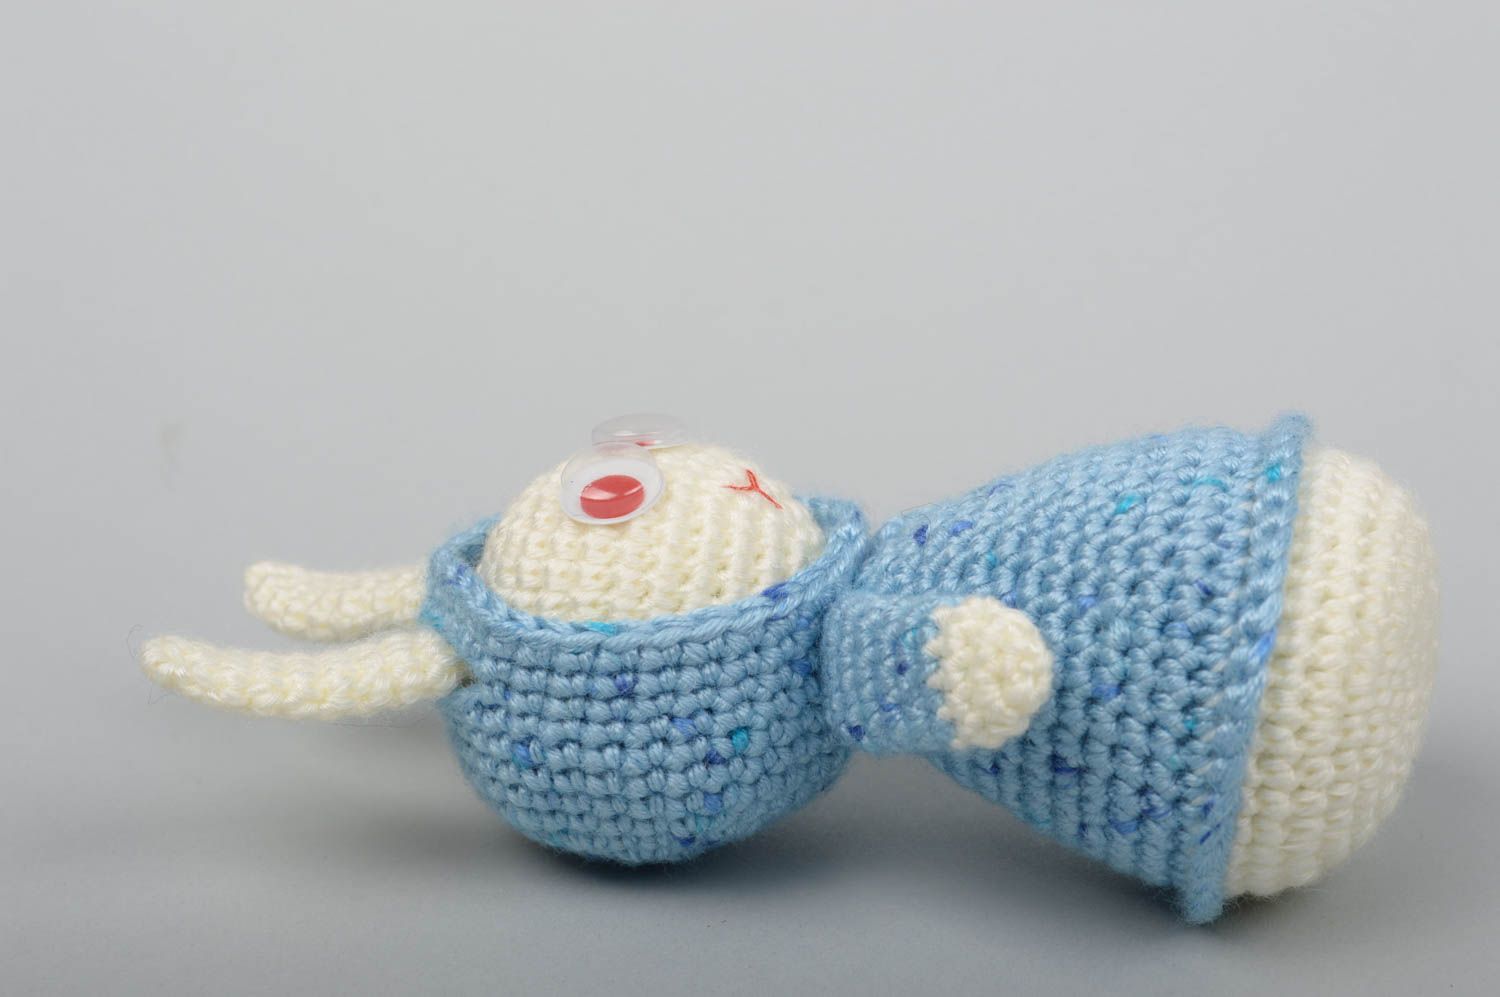 Beautiful handmade crochet toy stuffed toy hare interior decorating gift ideas photo 4